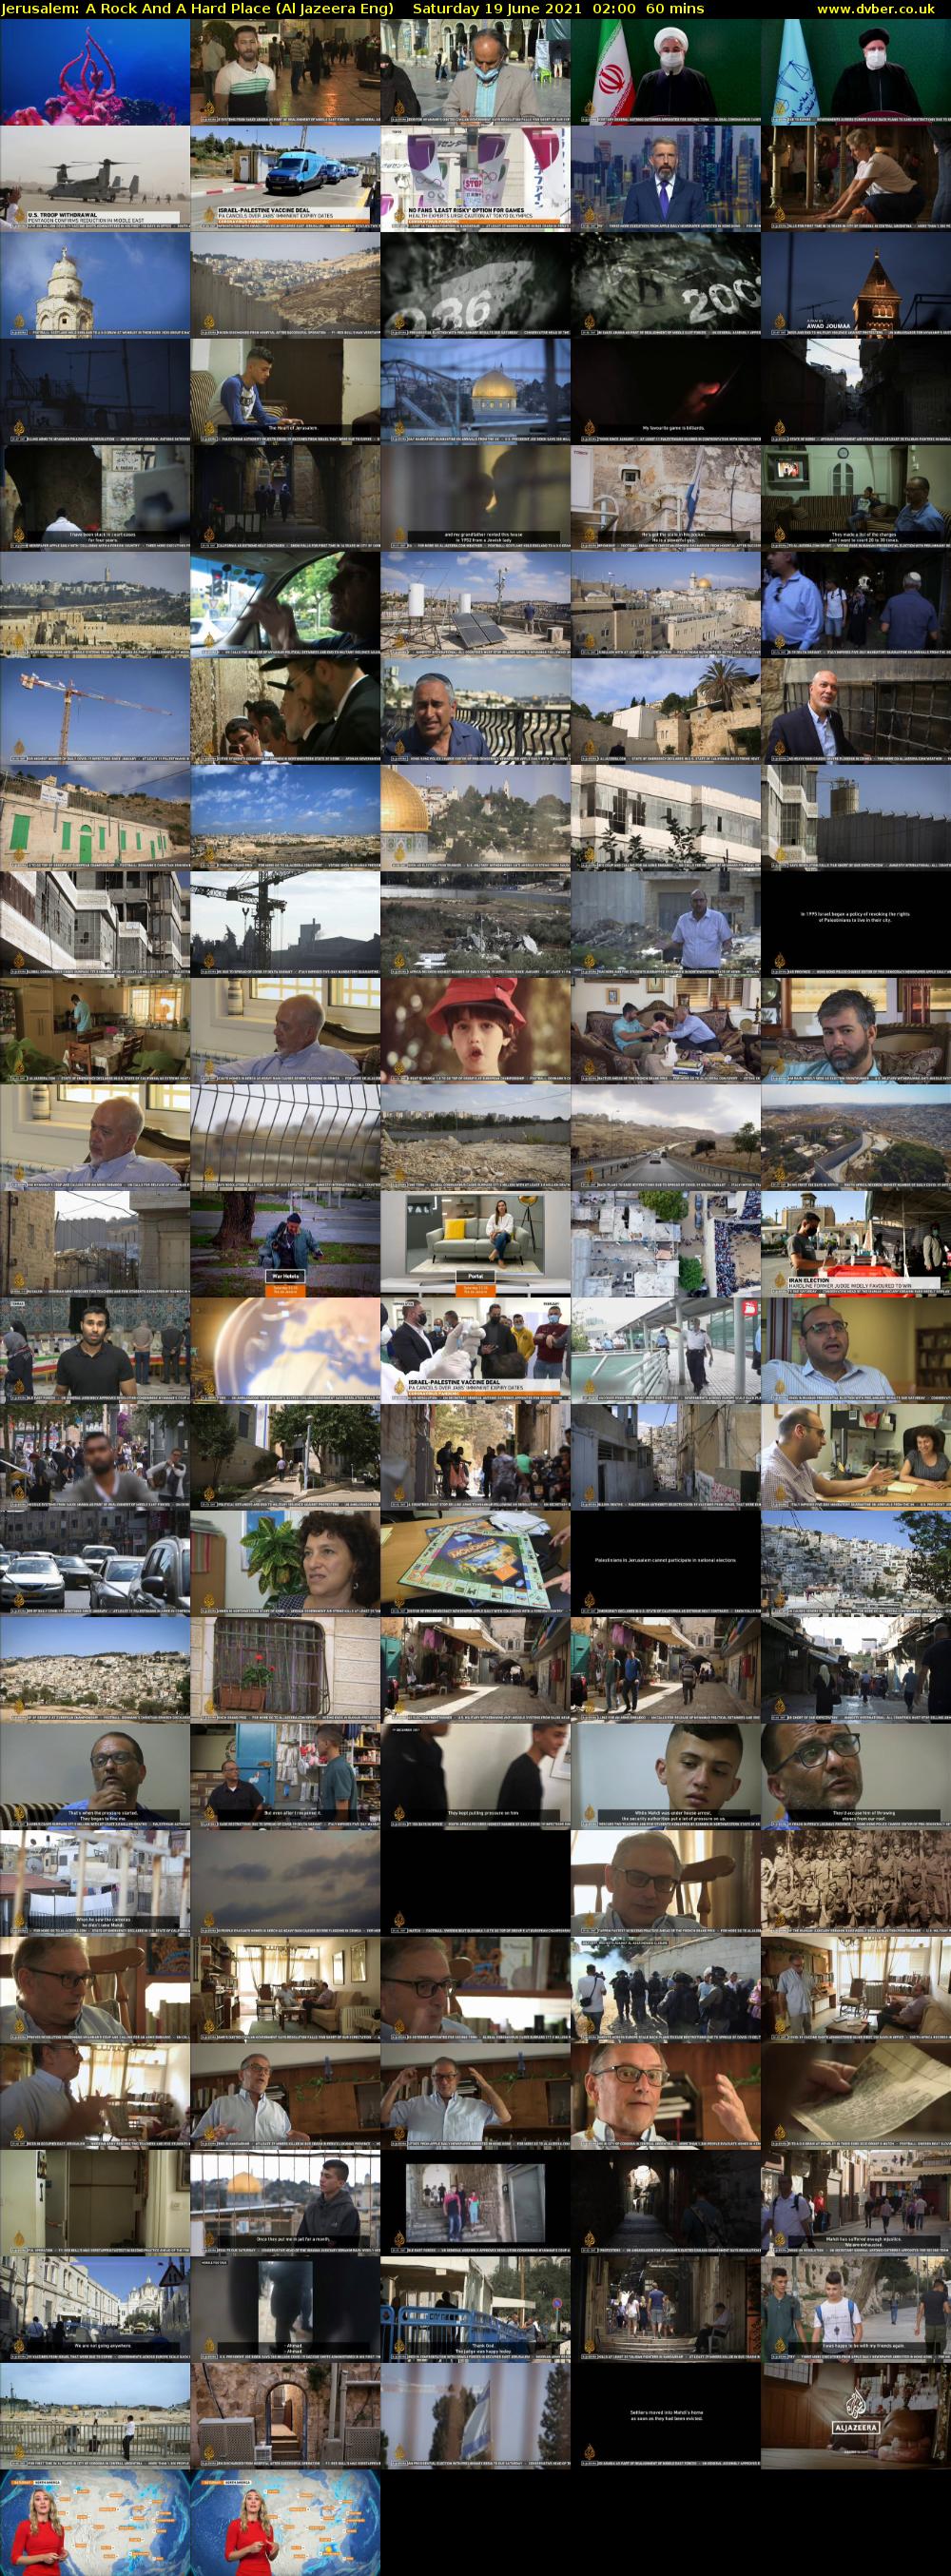 Jerusalem: A Rock And A Hard Place (Al Jazeera Eng) Saturday 19 June 2021 02:00 - 03:00